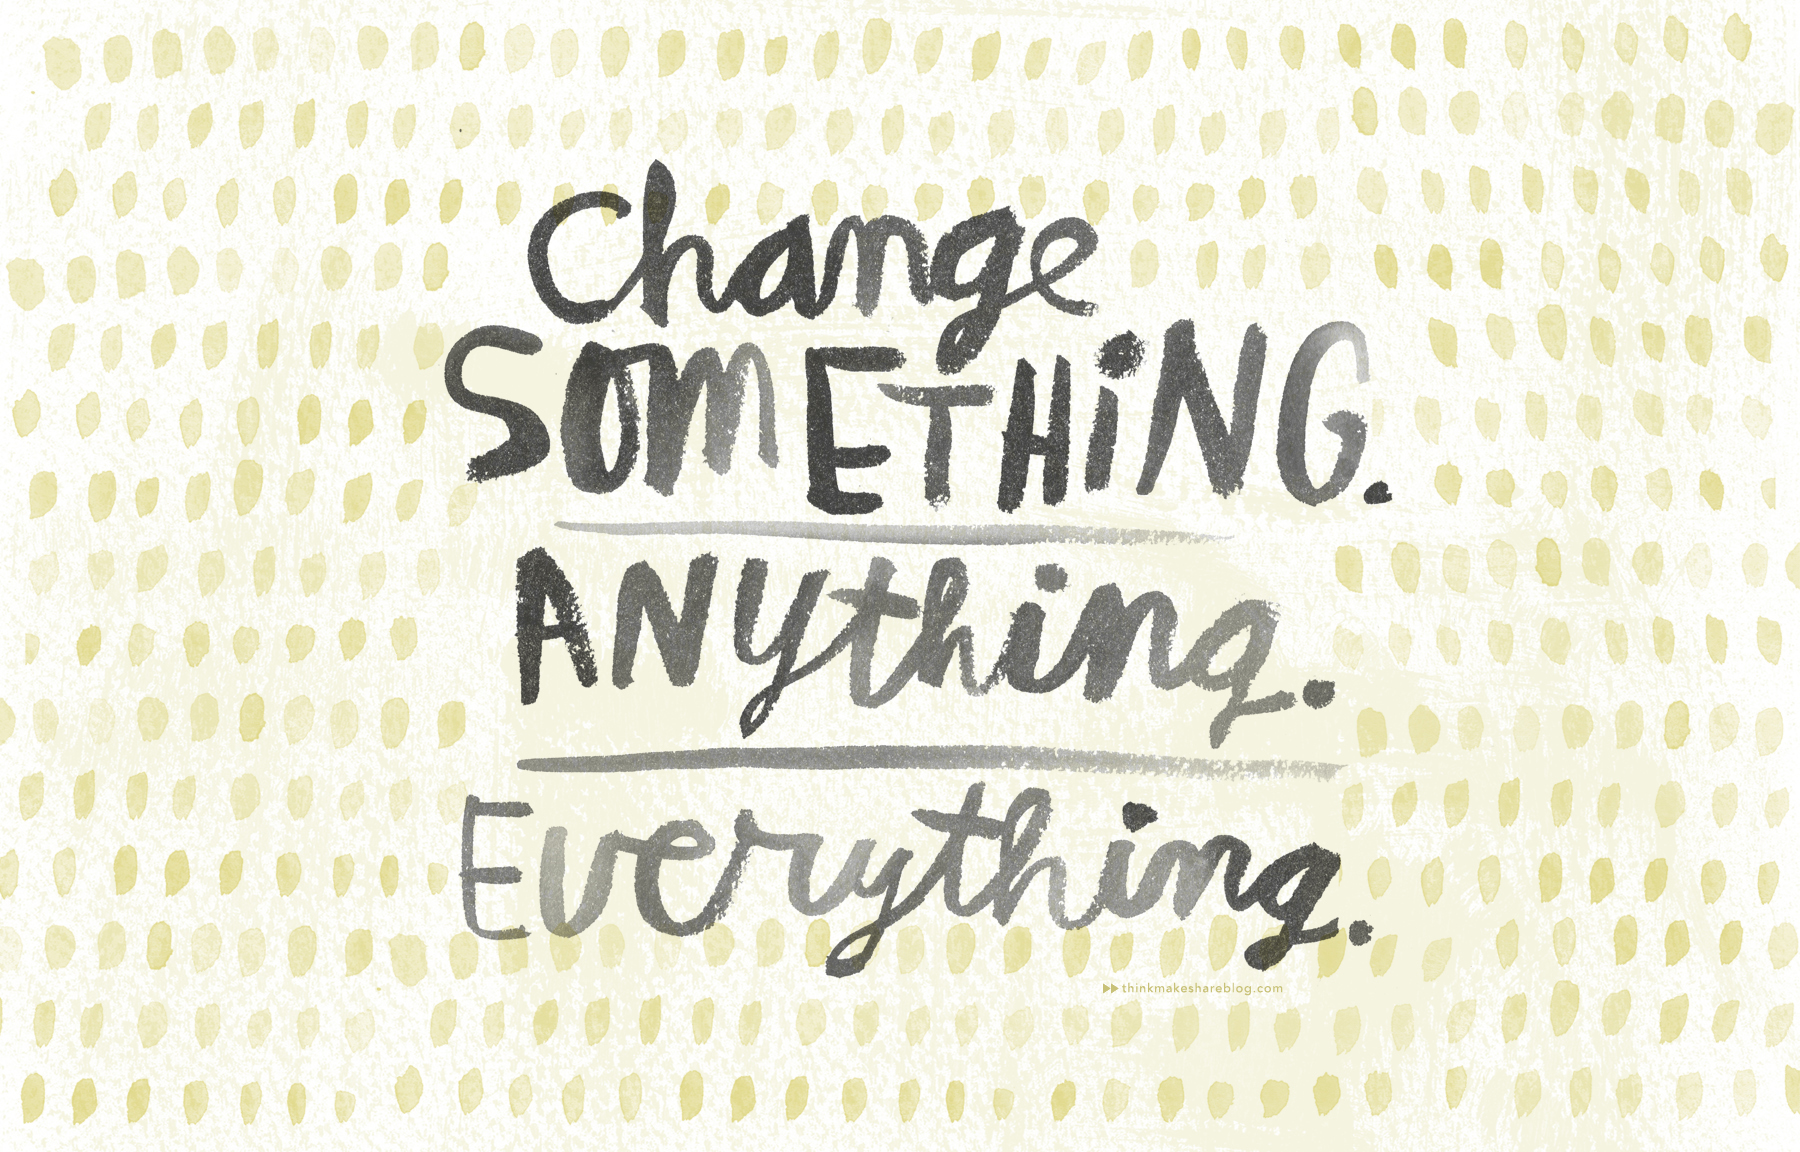 Digital wallpaper for a season of change.Make.Share